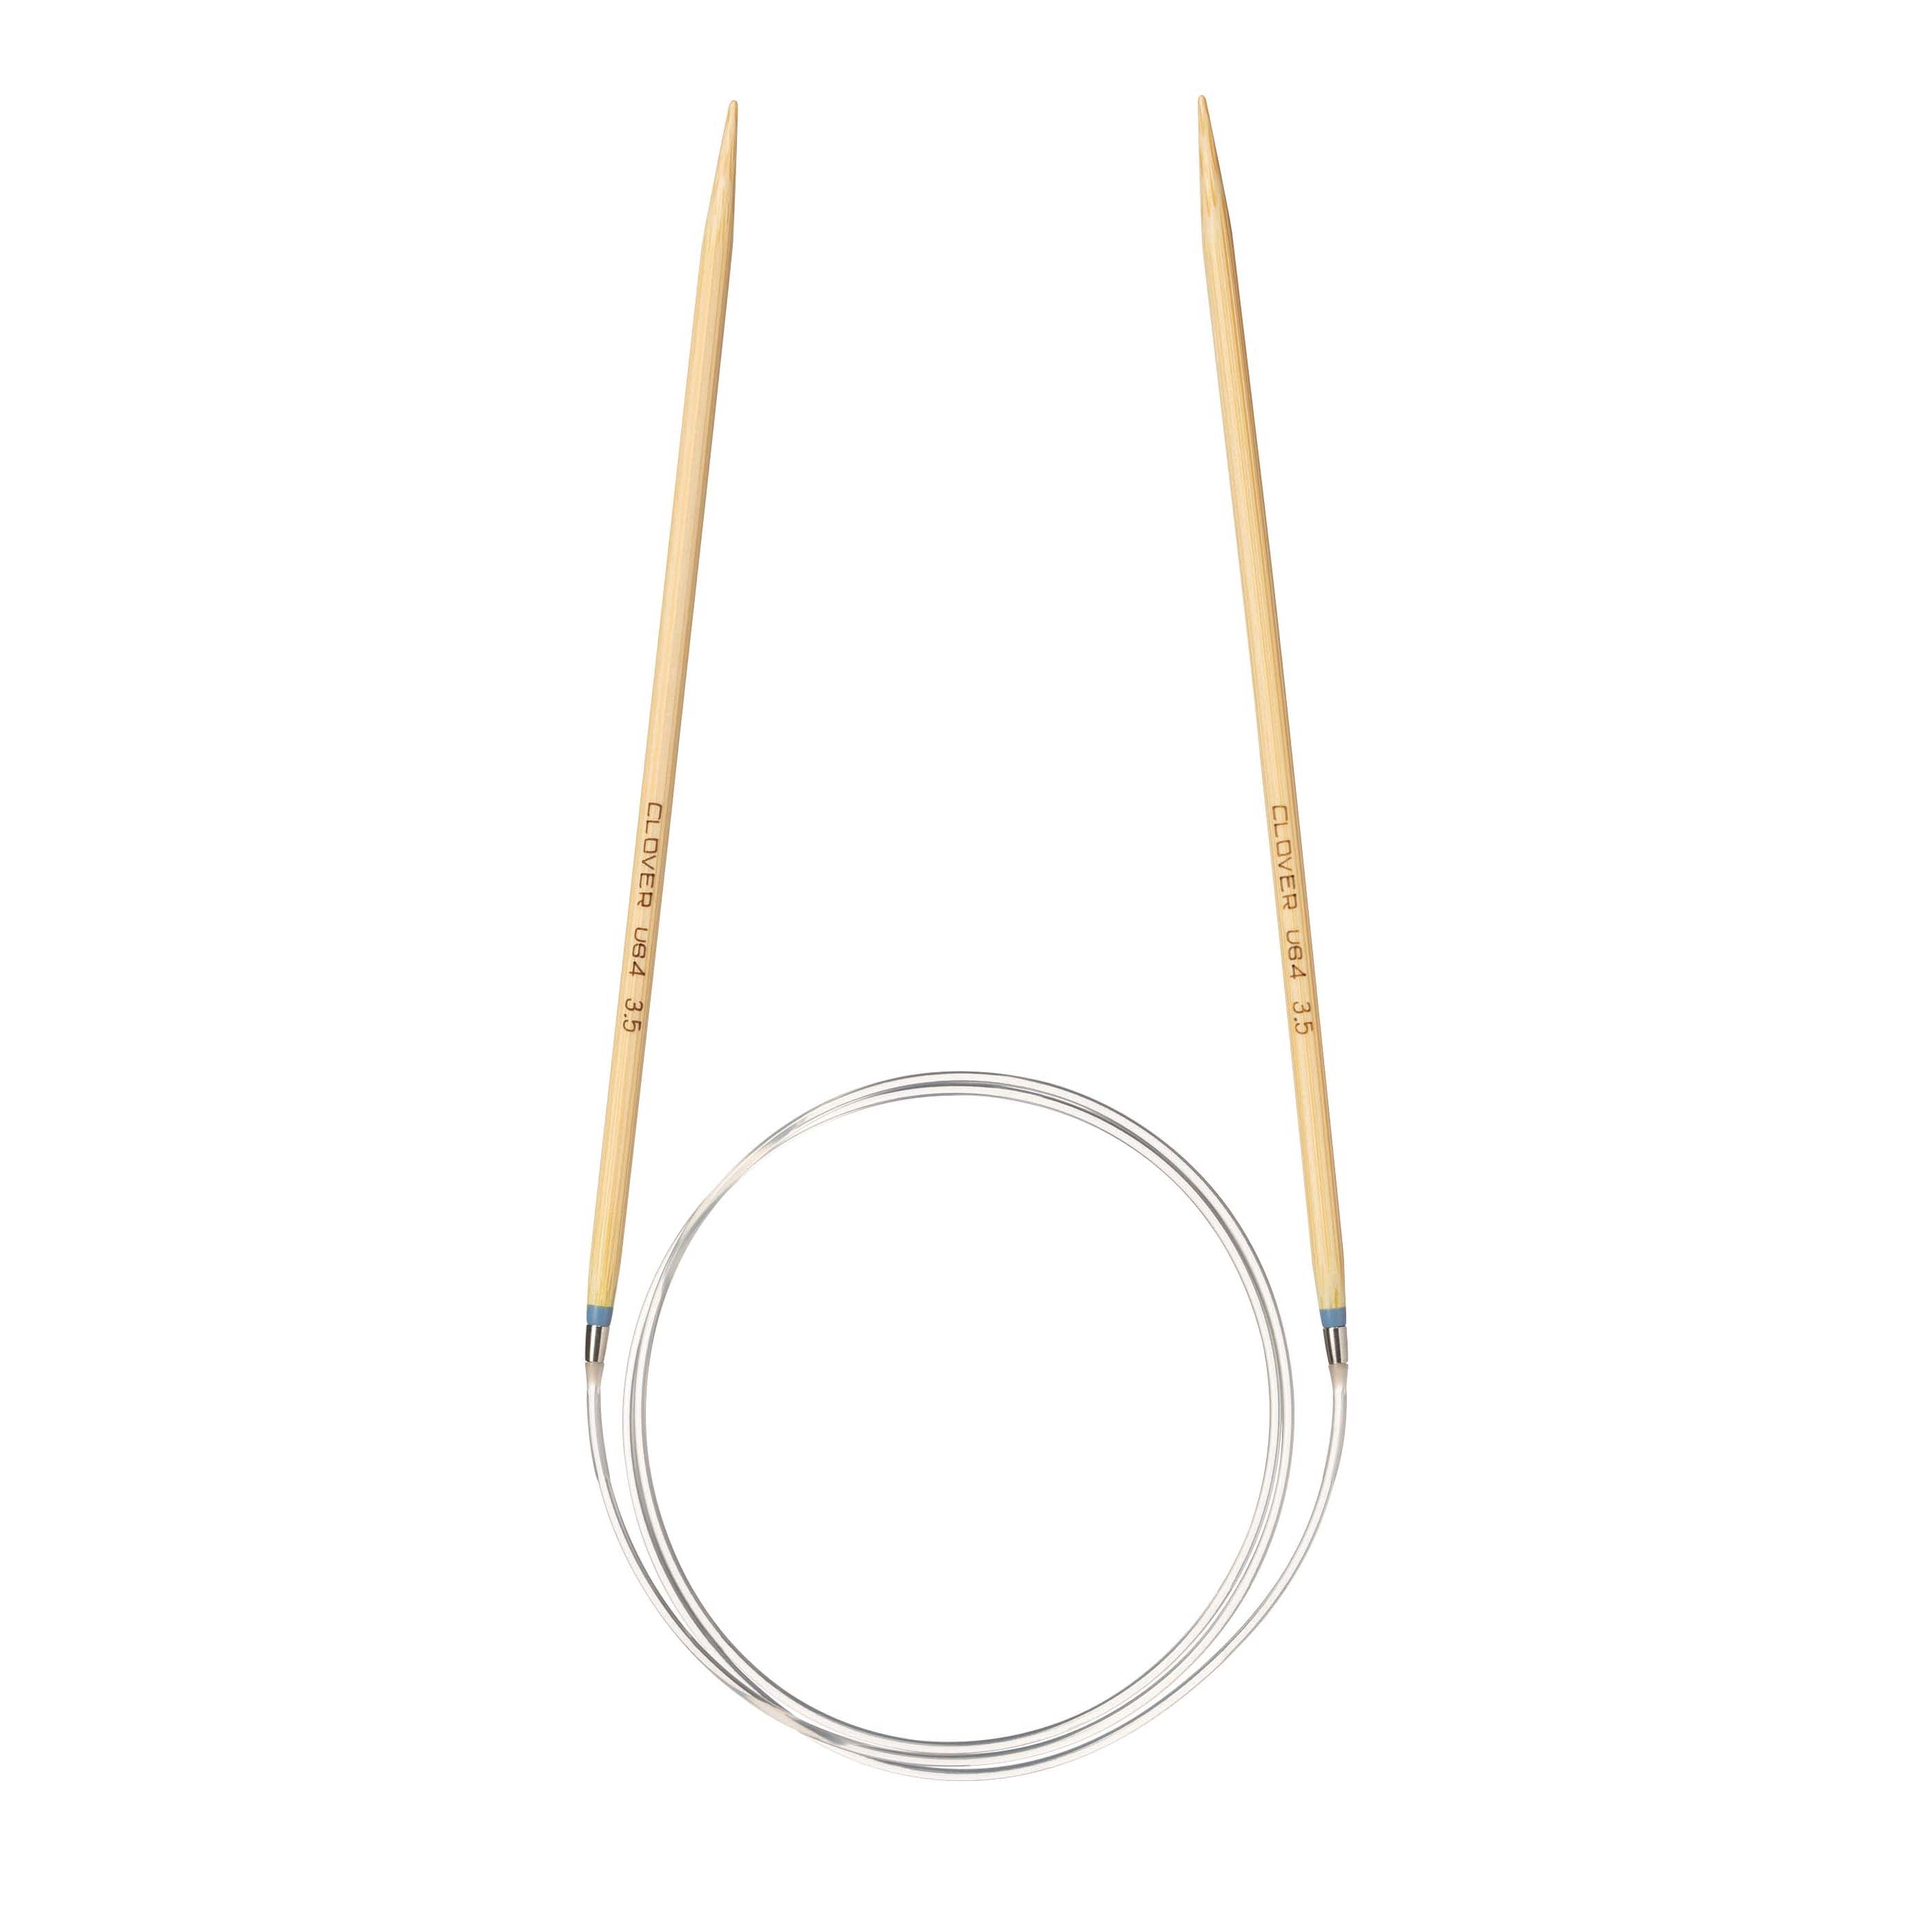 Clover, Takumi Bamboo Circular Knitting Needles: 9″ – Copper